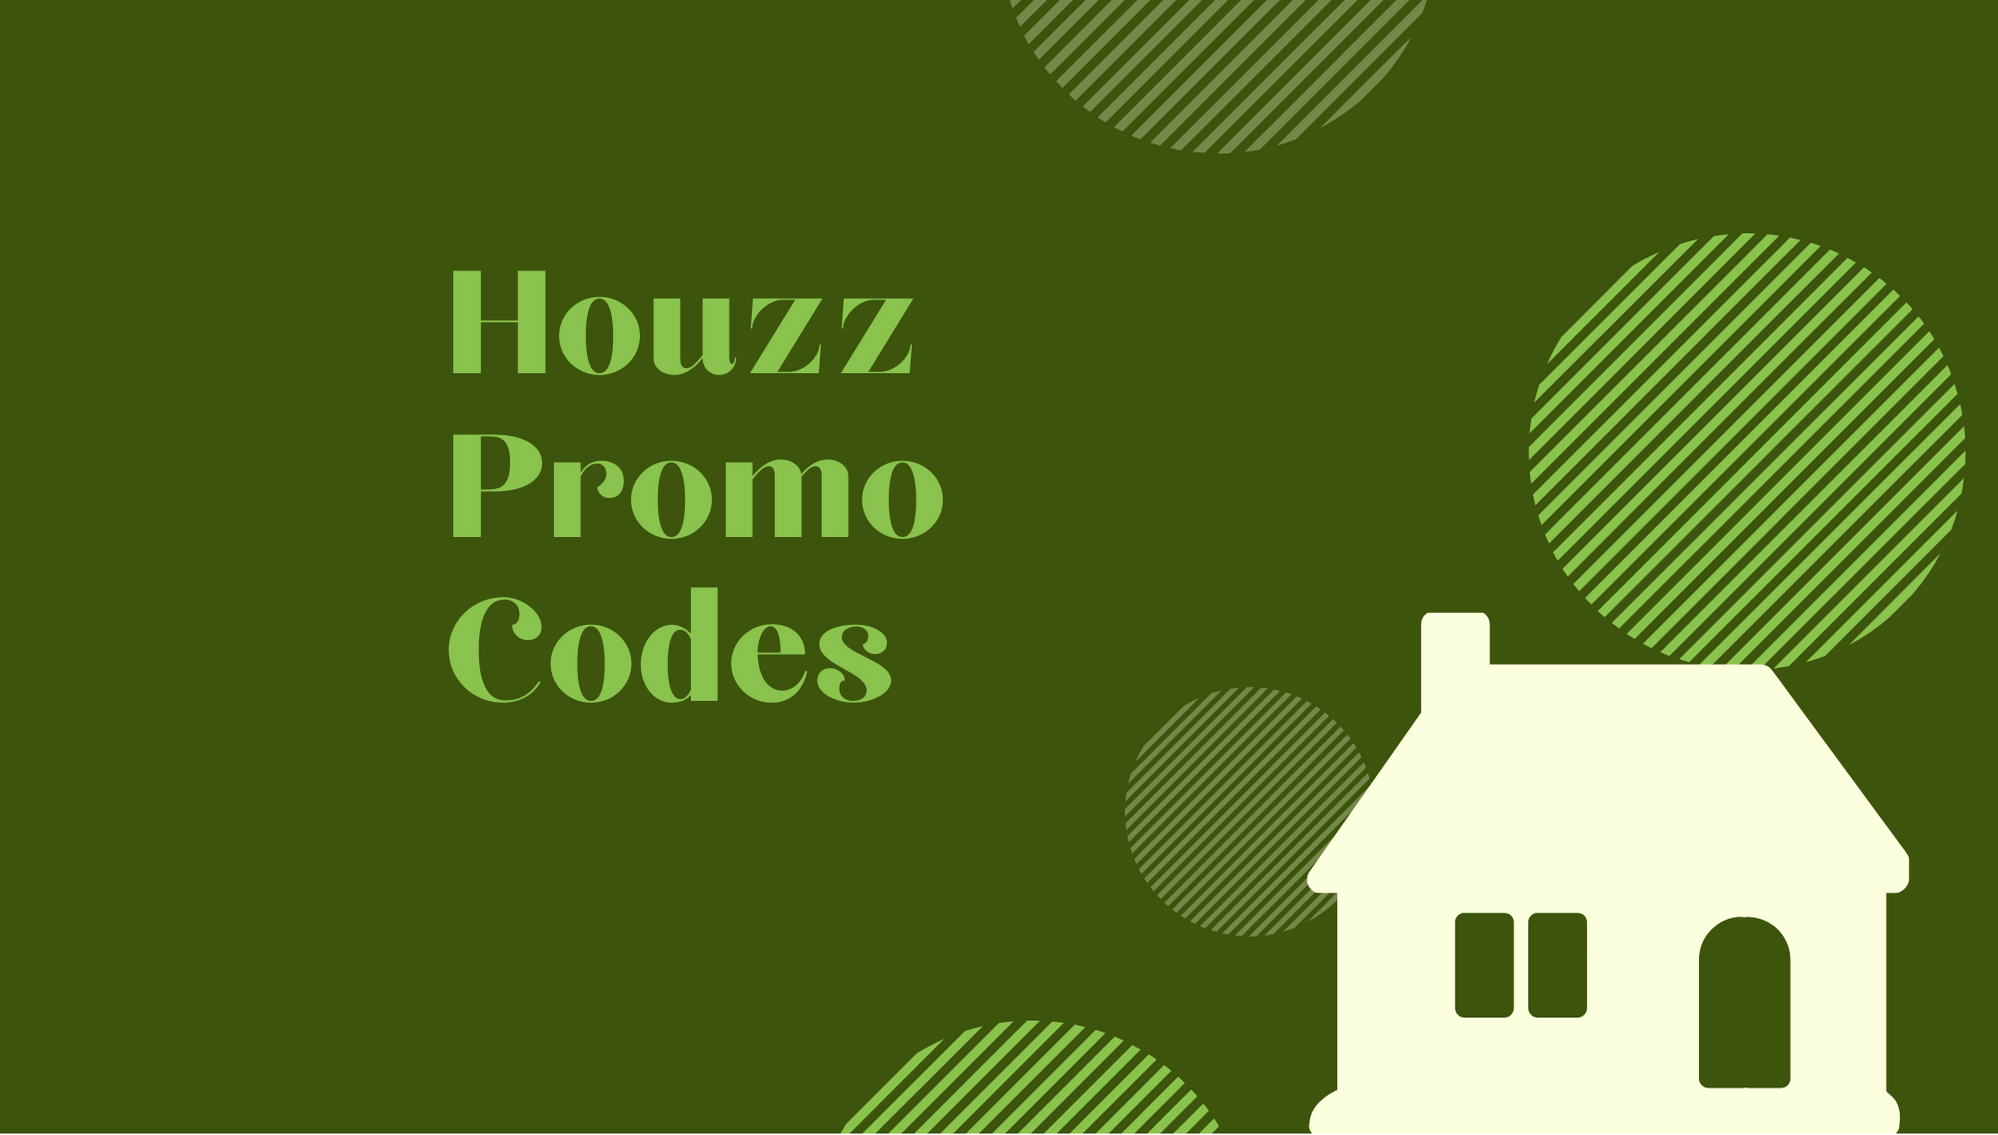 houzz promo code december 2017